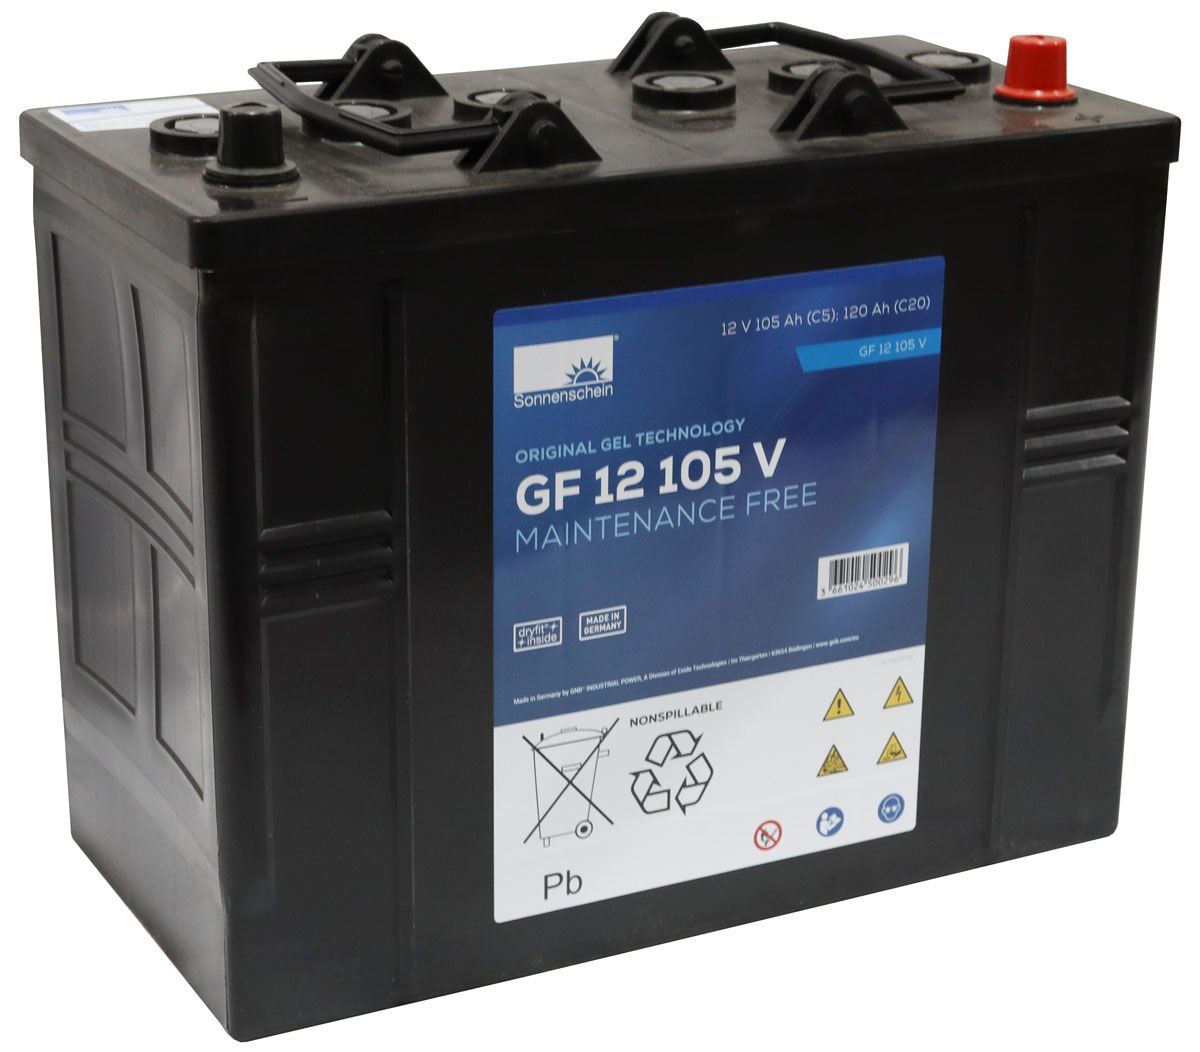 GF12105V Sonnenschein Battery (GF 12 105 V)